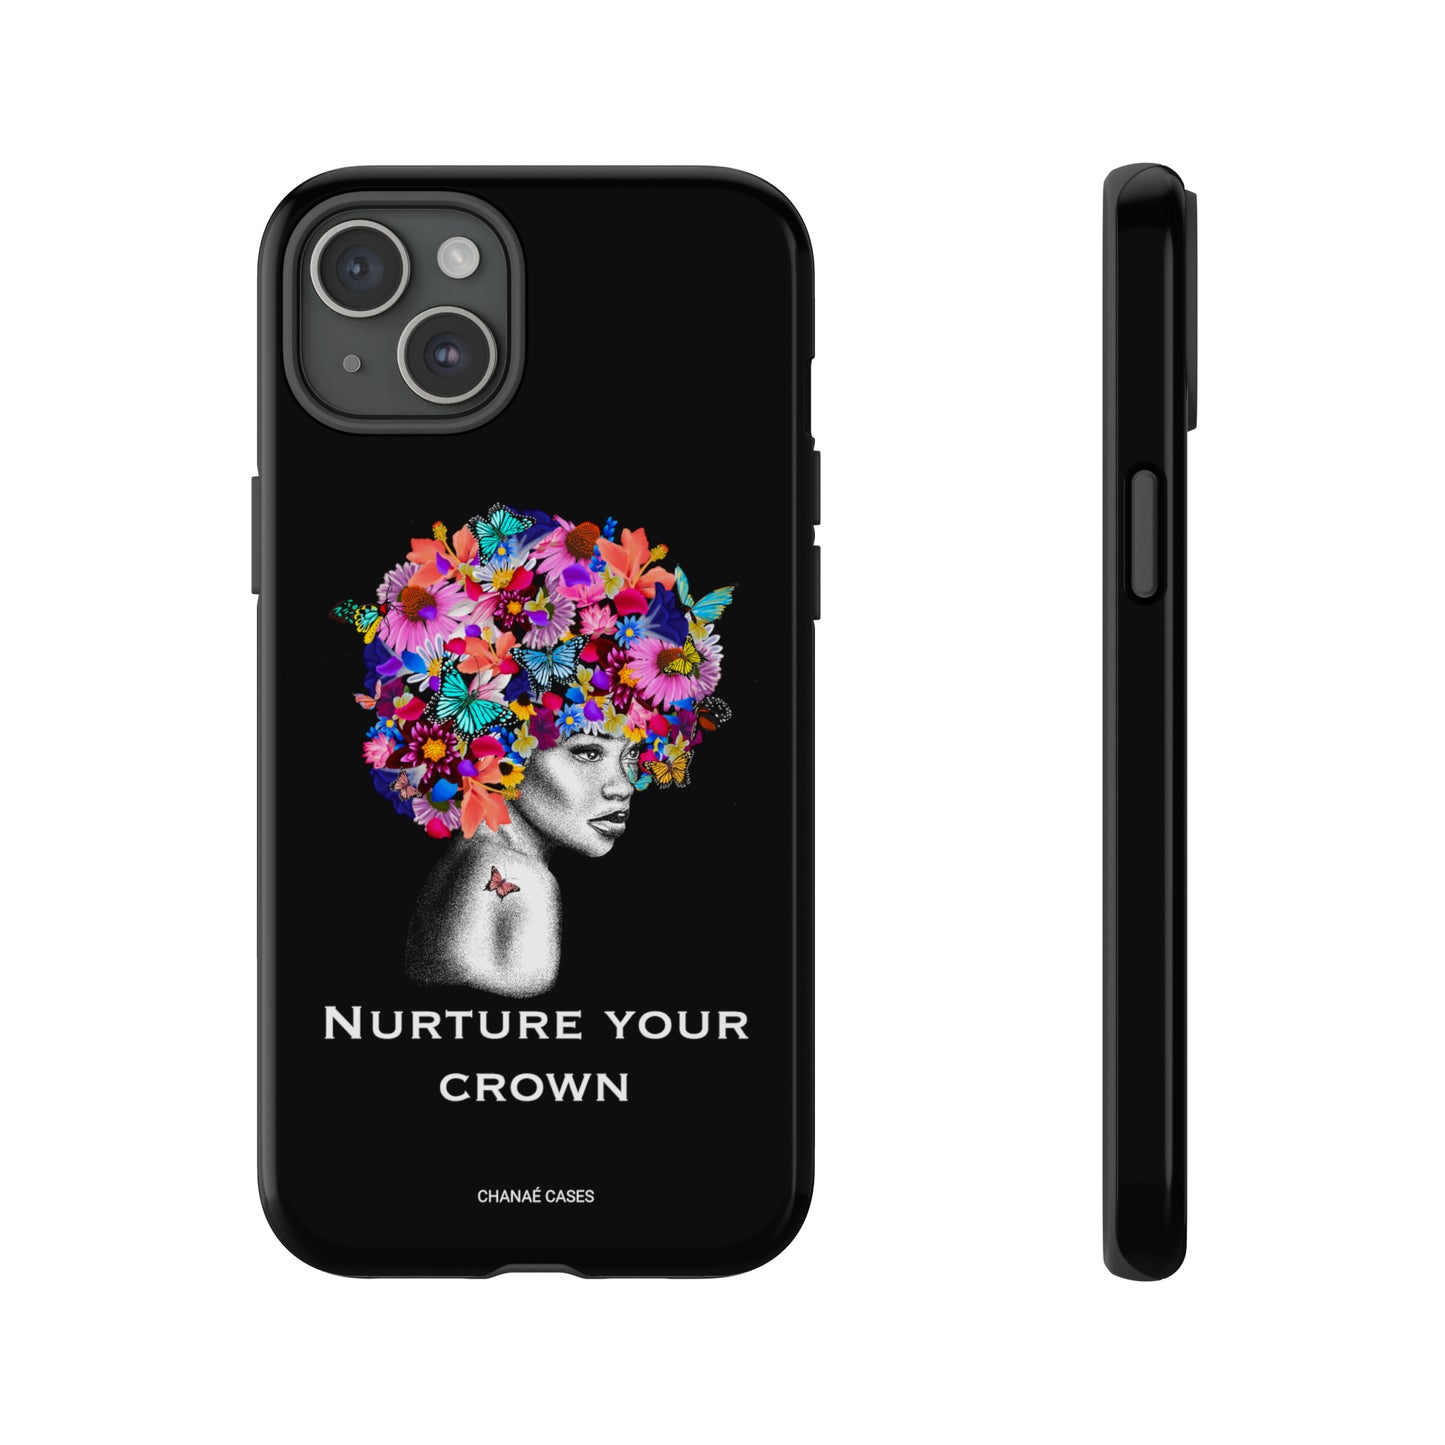 Nurture Your Crown iPhone "Tough" Case (Black)